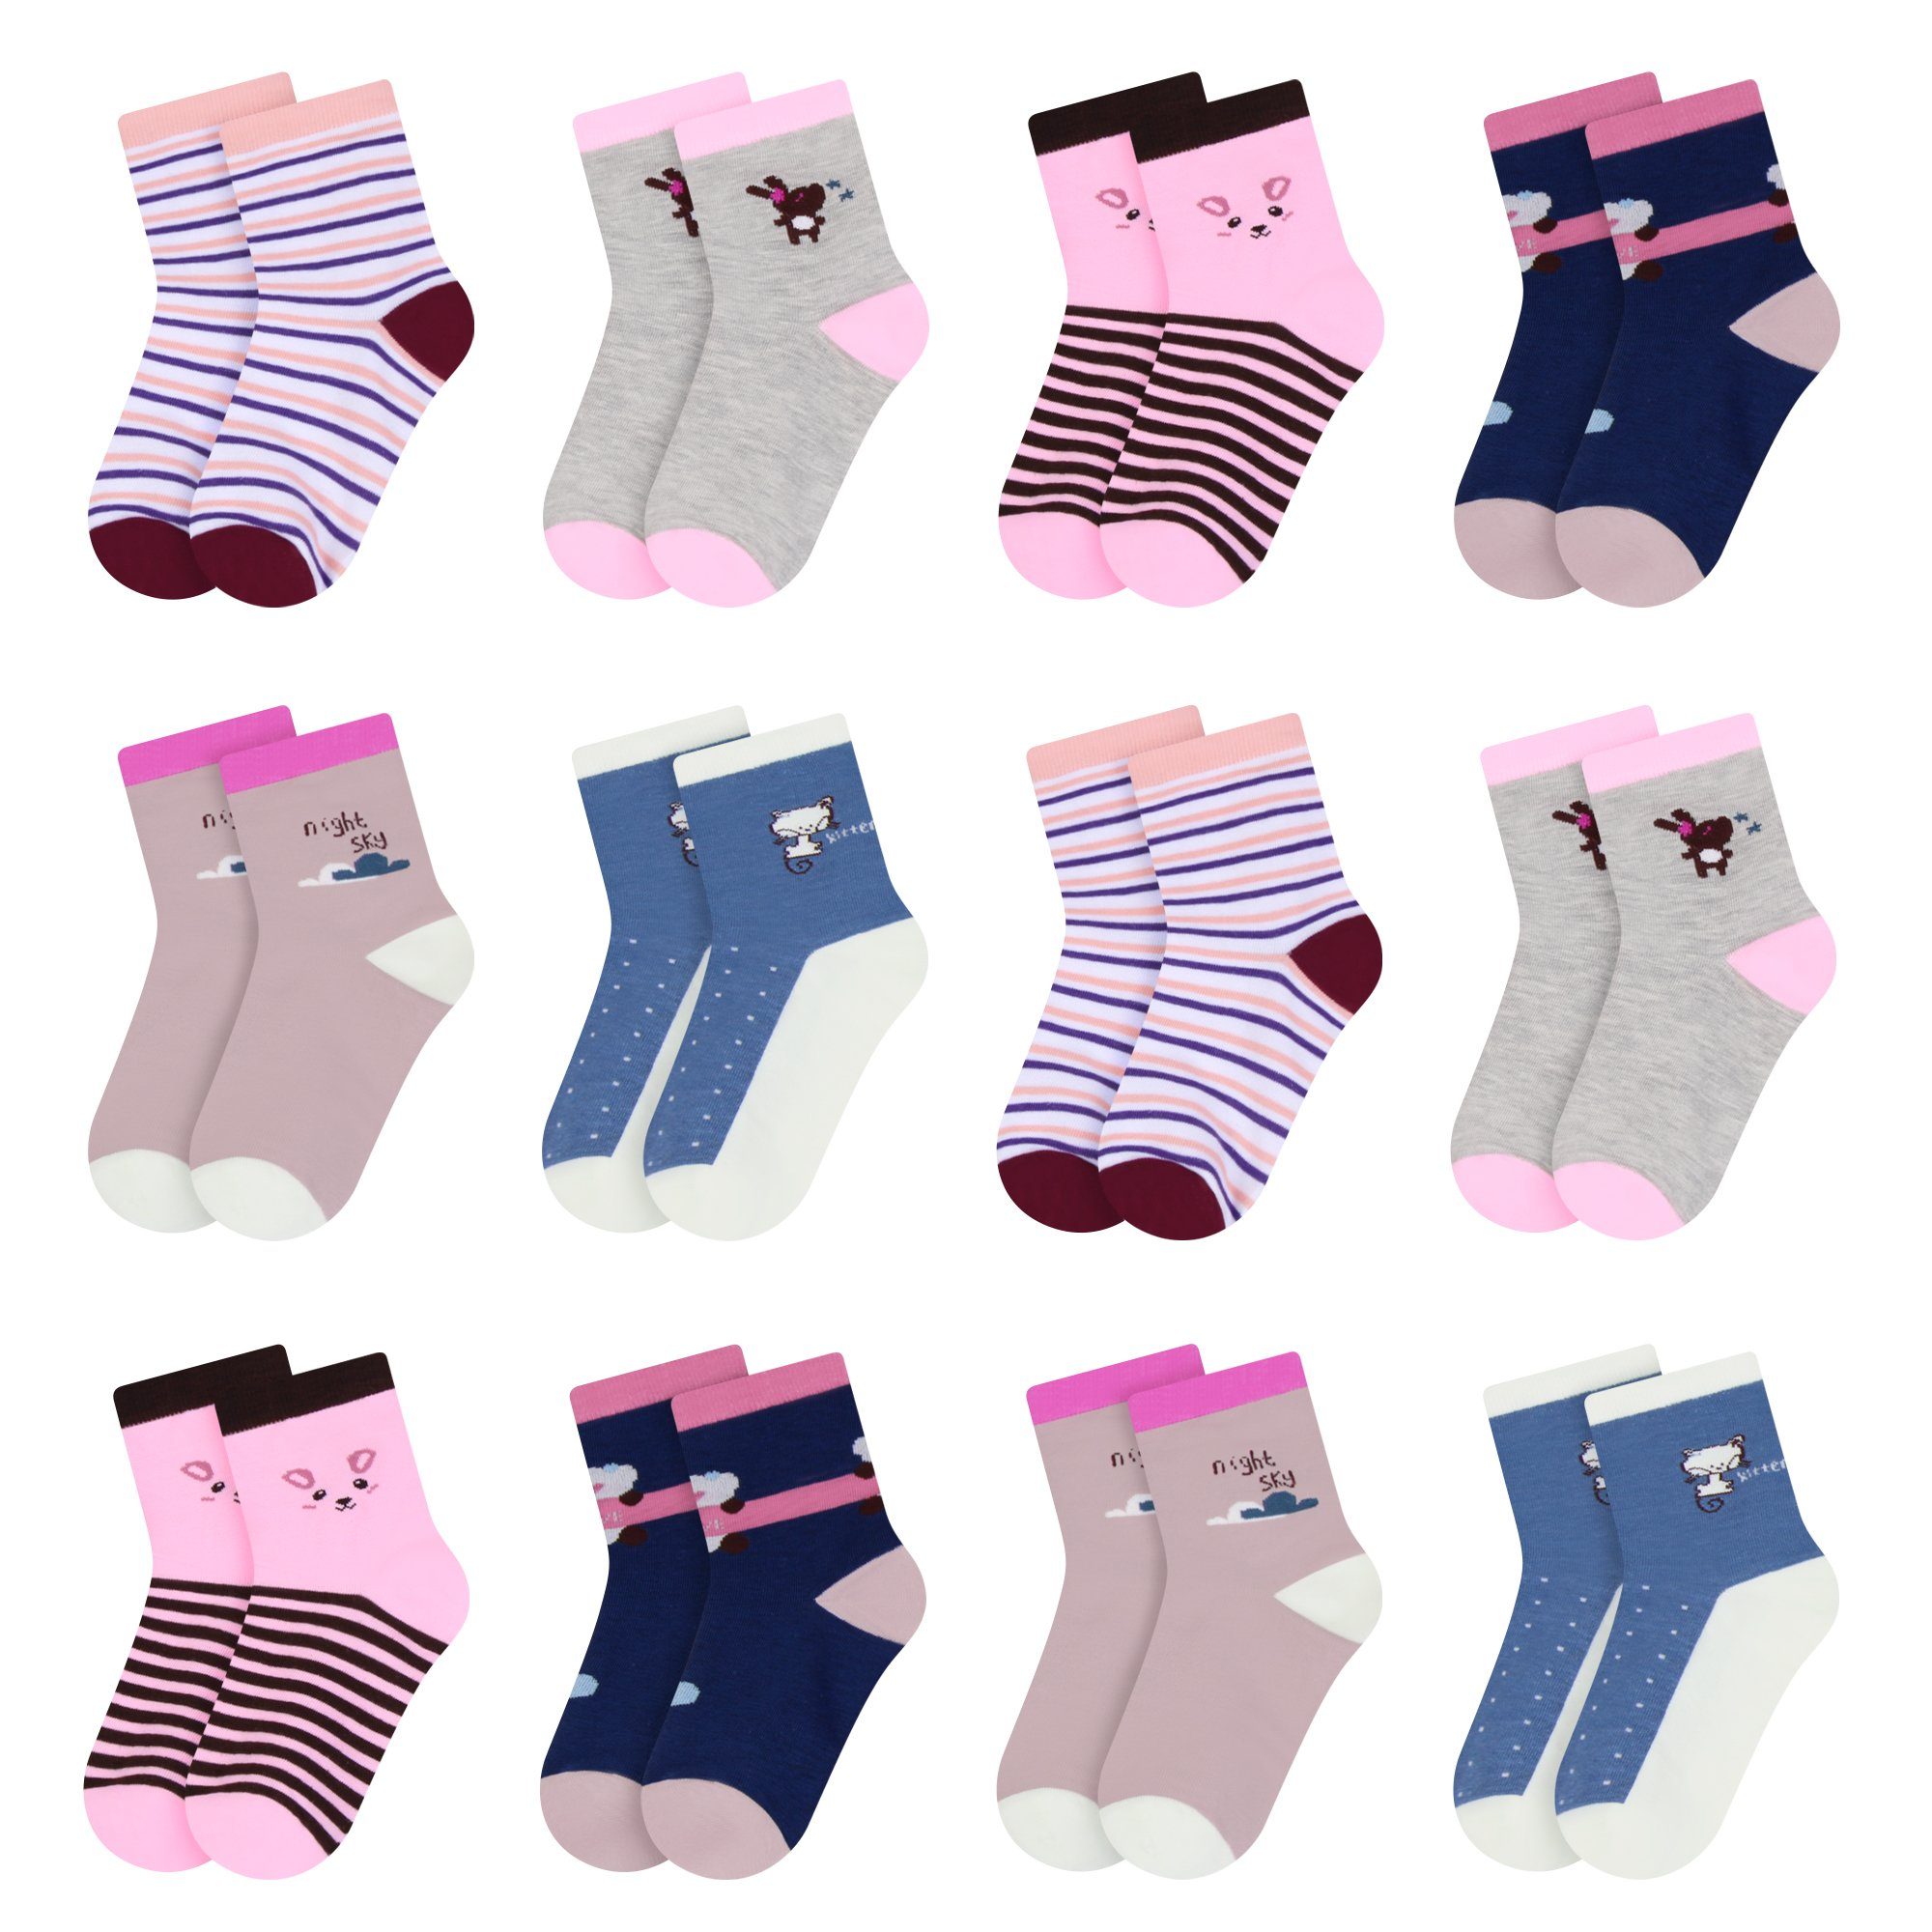 L&K-II Langsocken 2803-2809 (Beutel, 10/12 Paar) Mädchen Socken aus Baumwolle